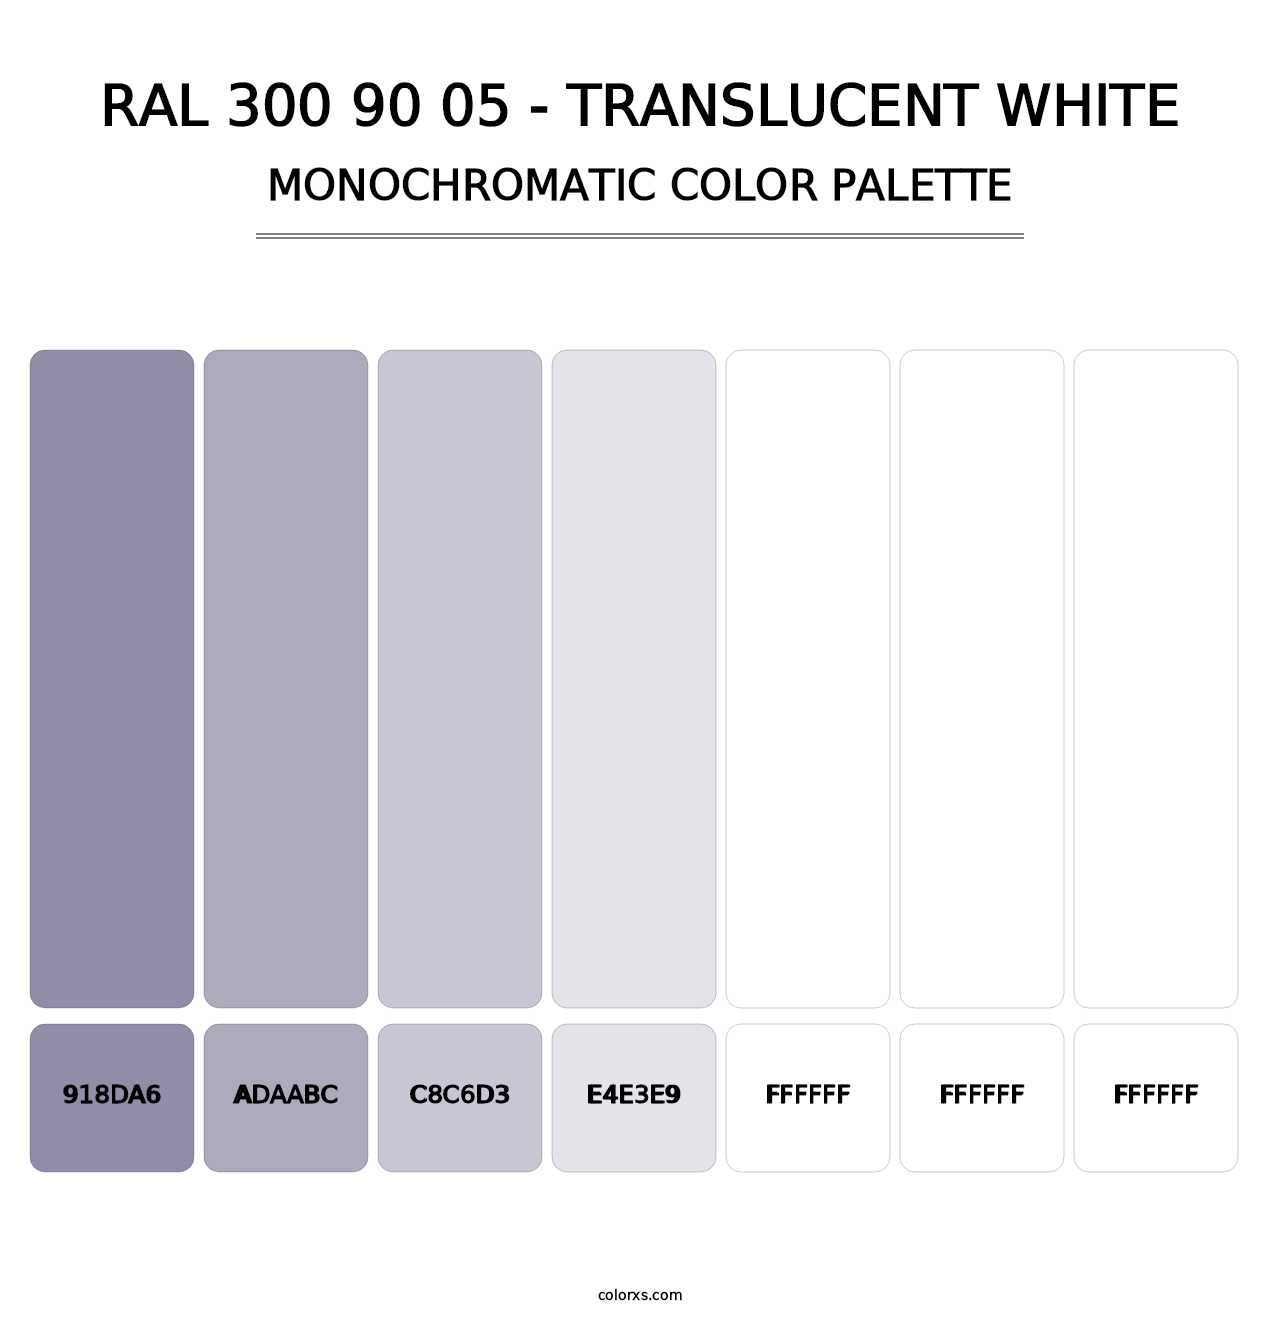 RAL 300 90 05 - Translucent White - Monochromatic Color Palette